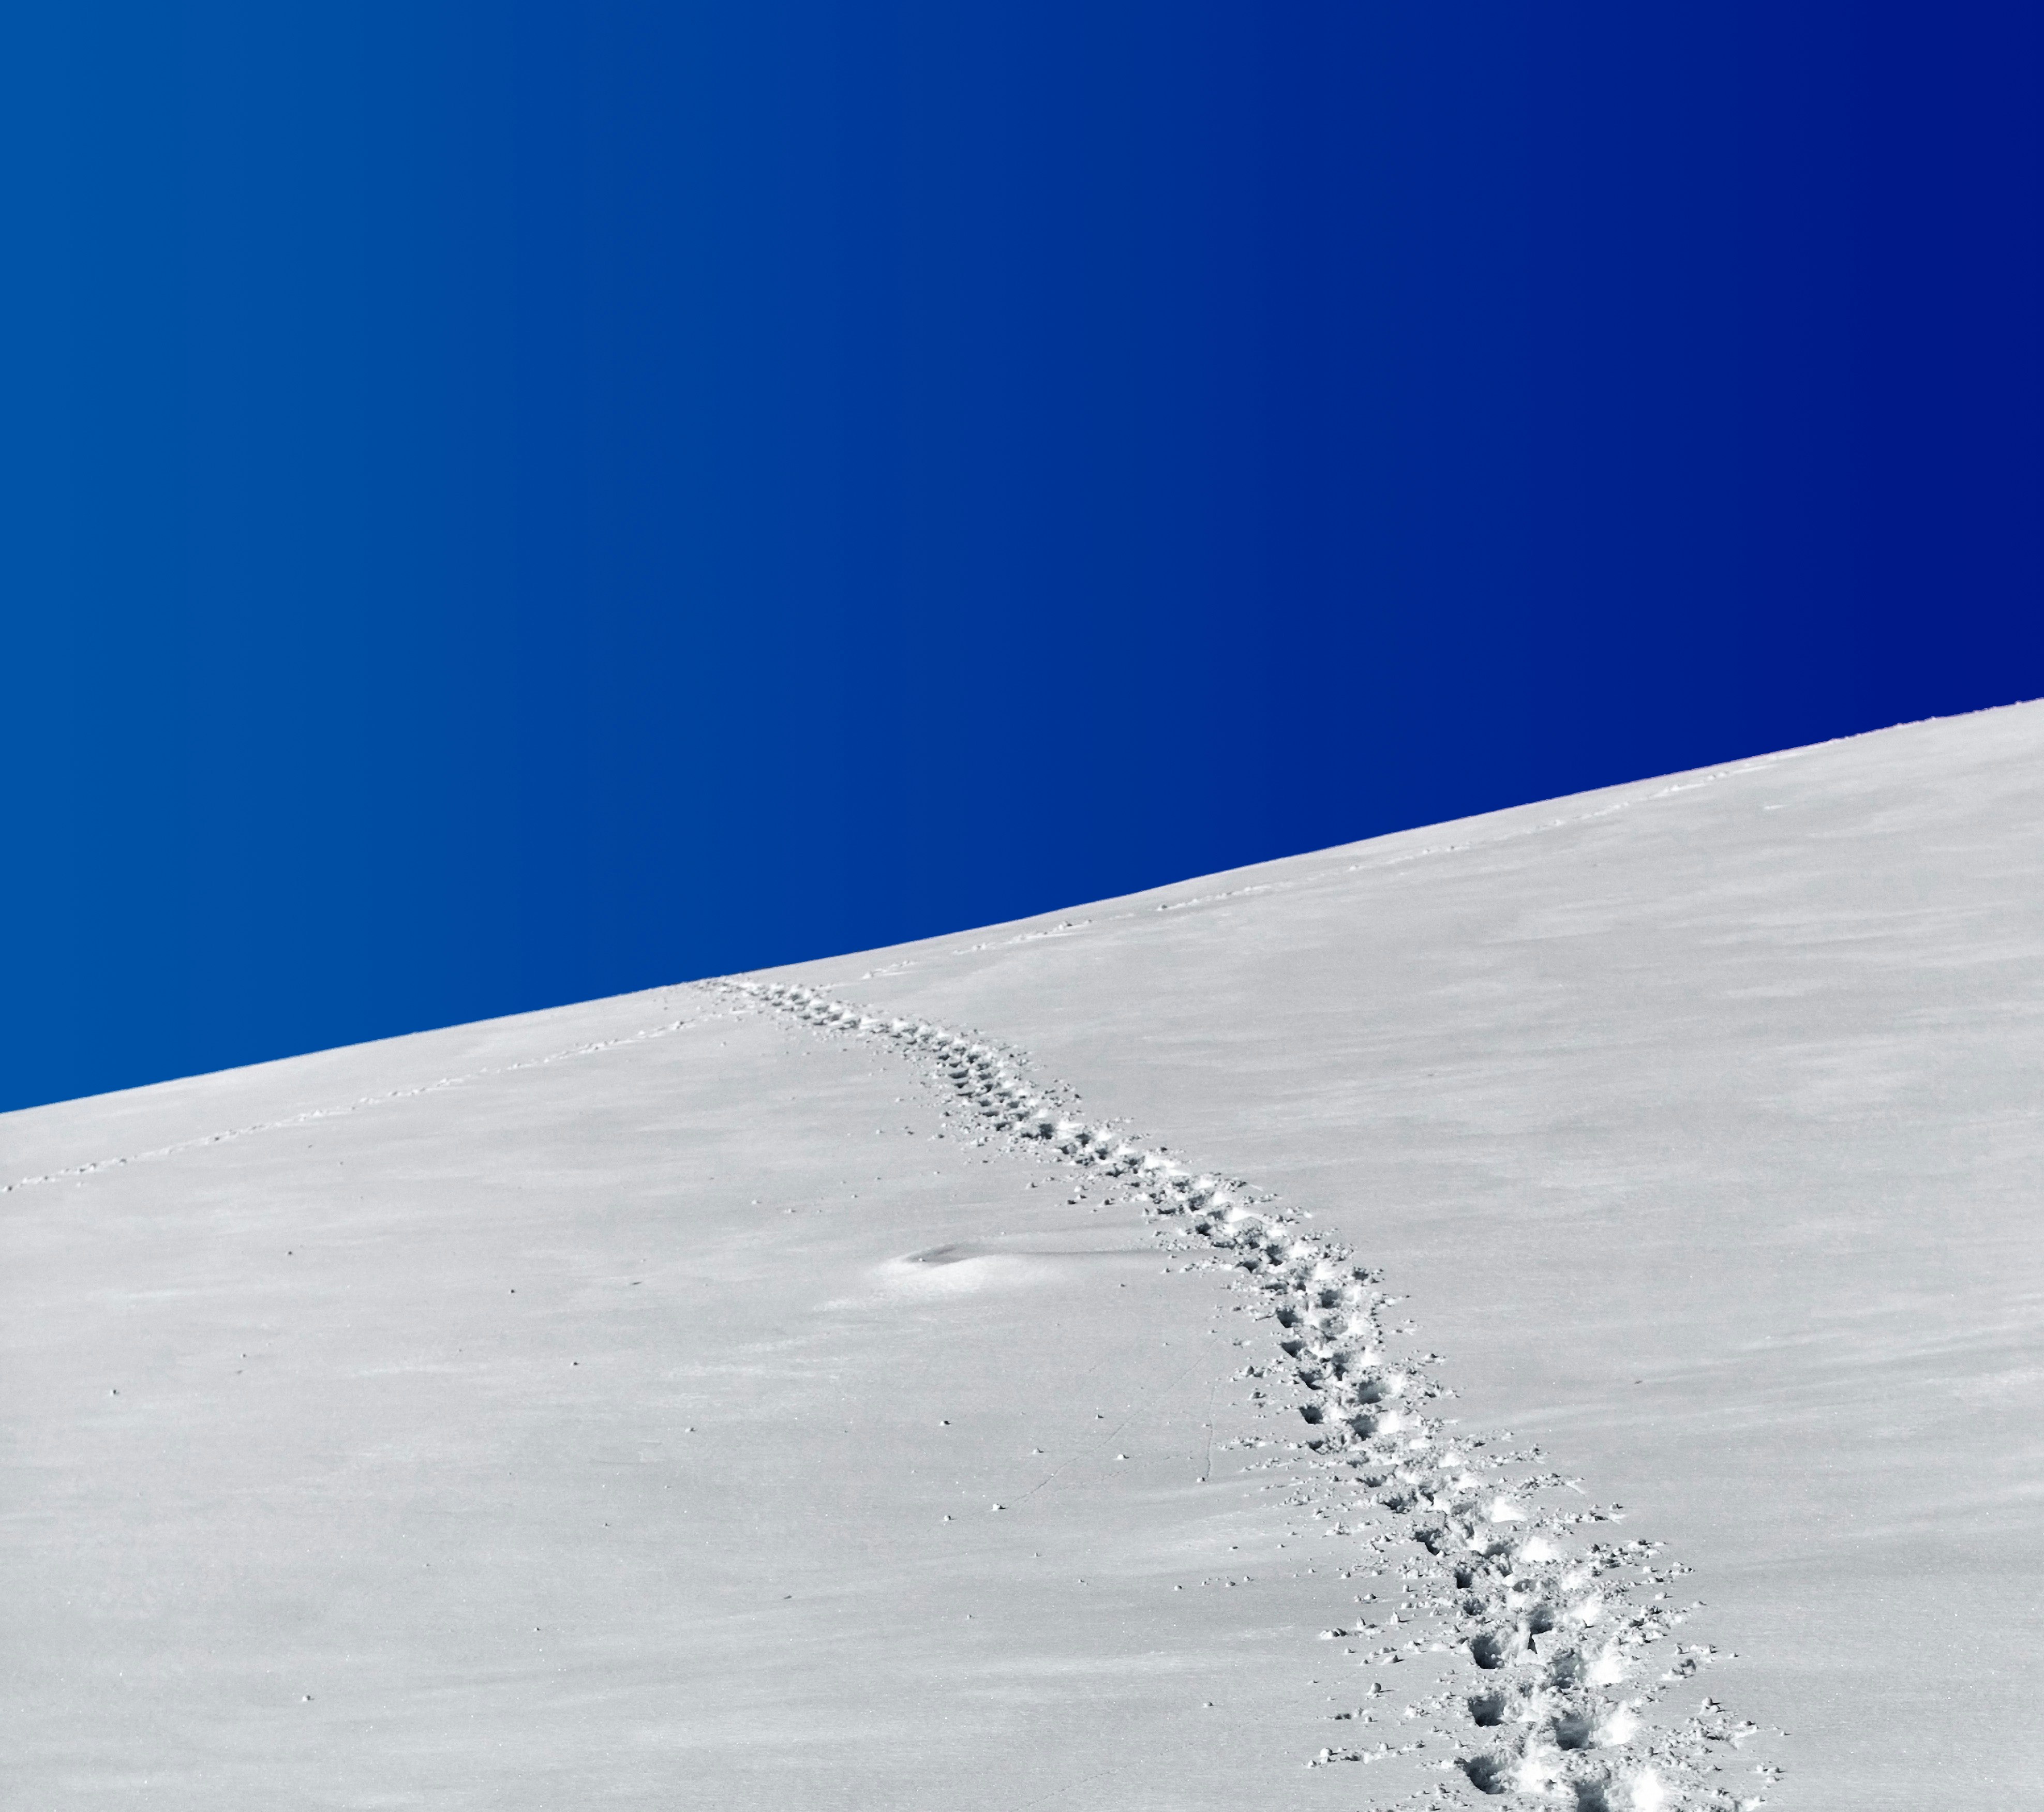 footprints in snow field under blue sky